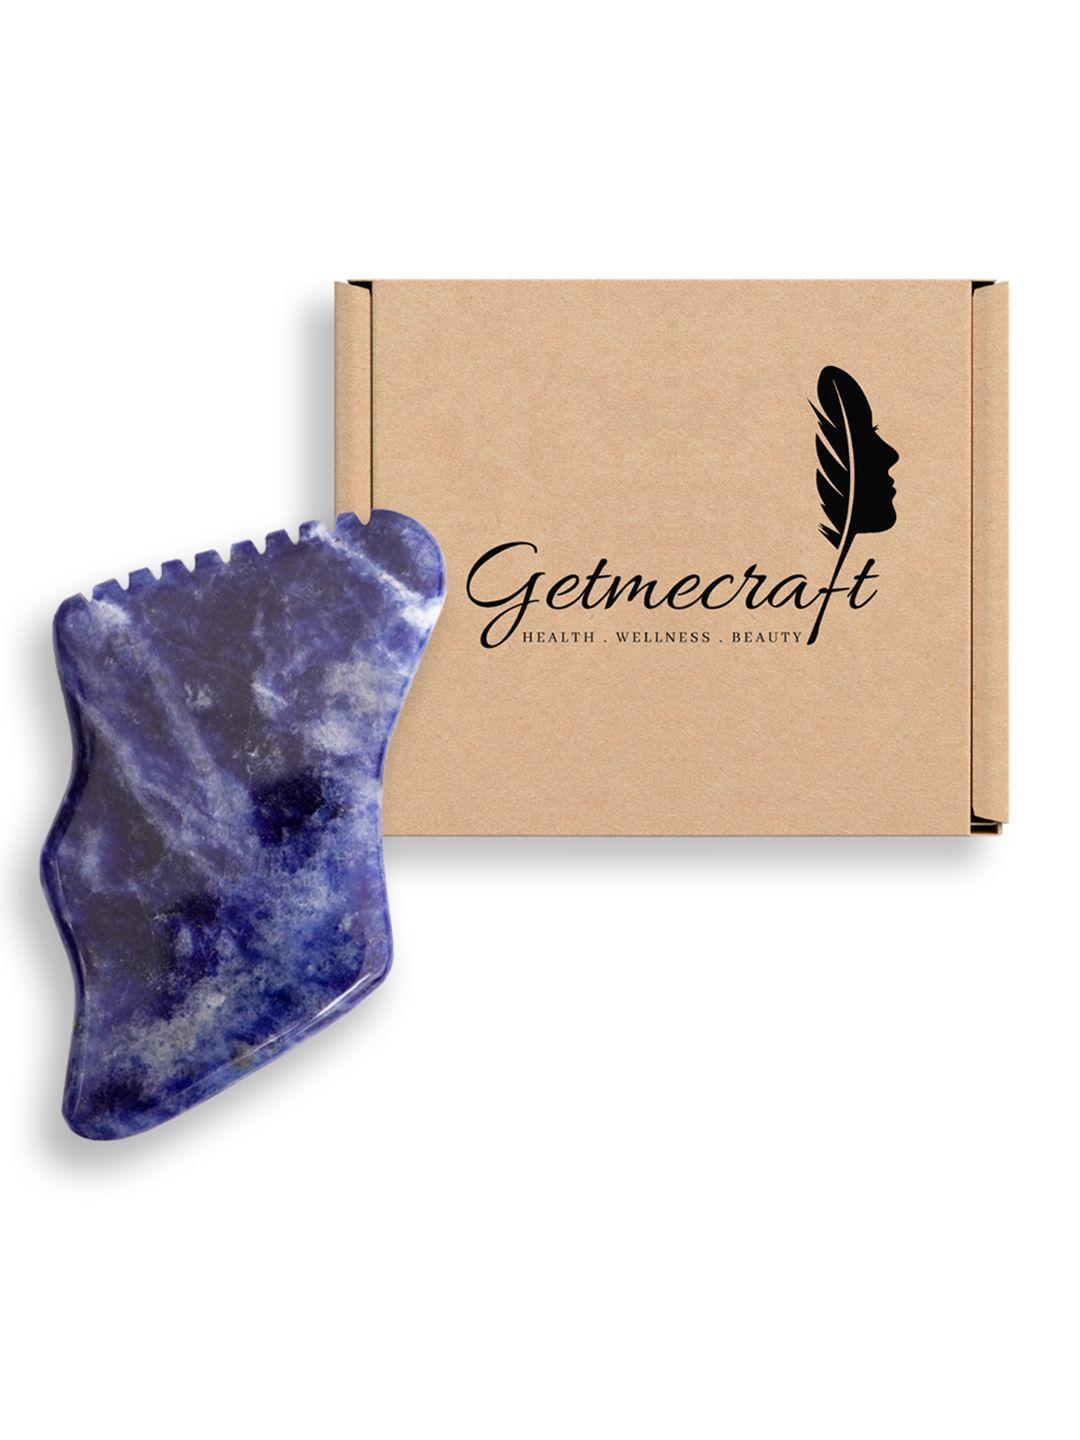 getmecraft sodalite gua sha facial massage tool with teeth shape sides & ridges